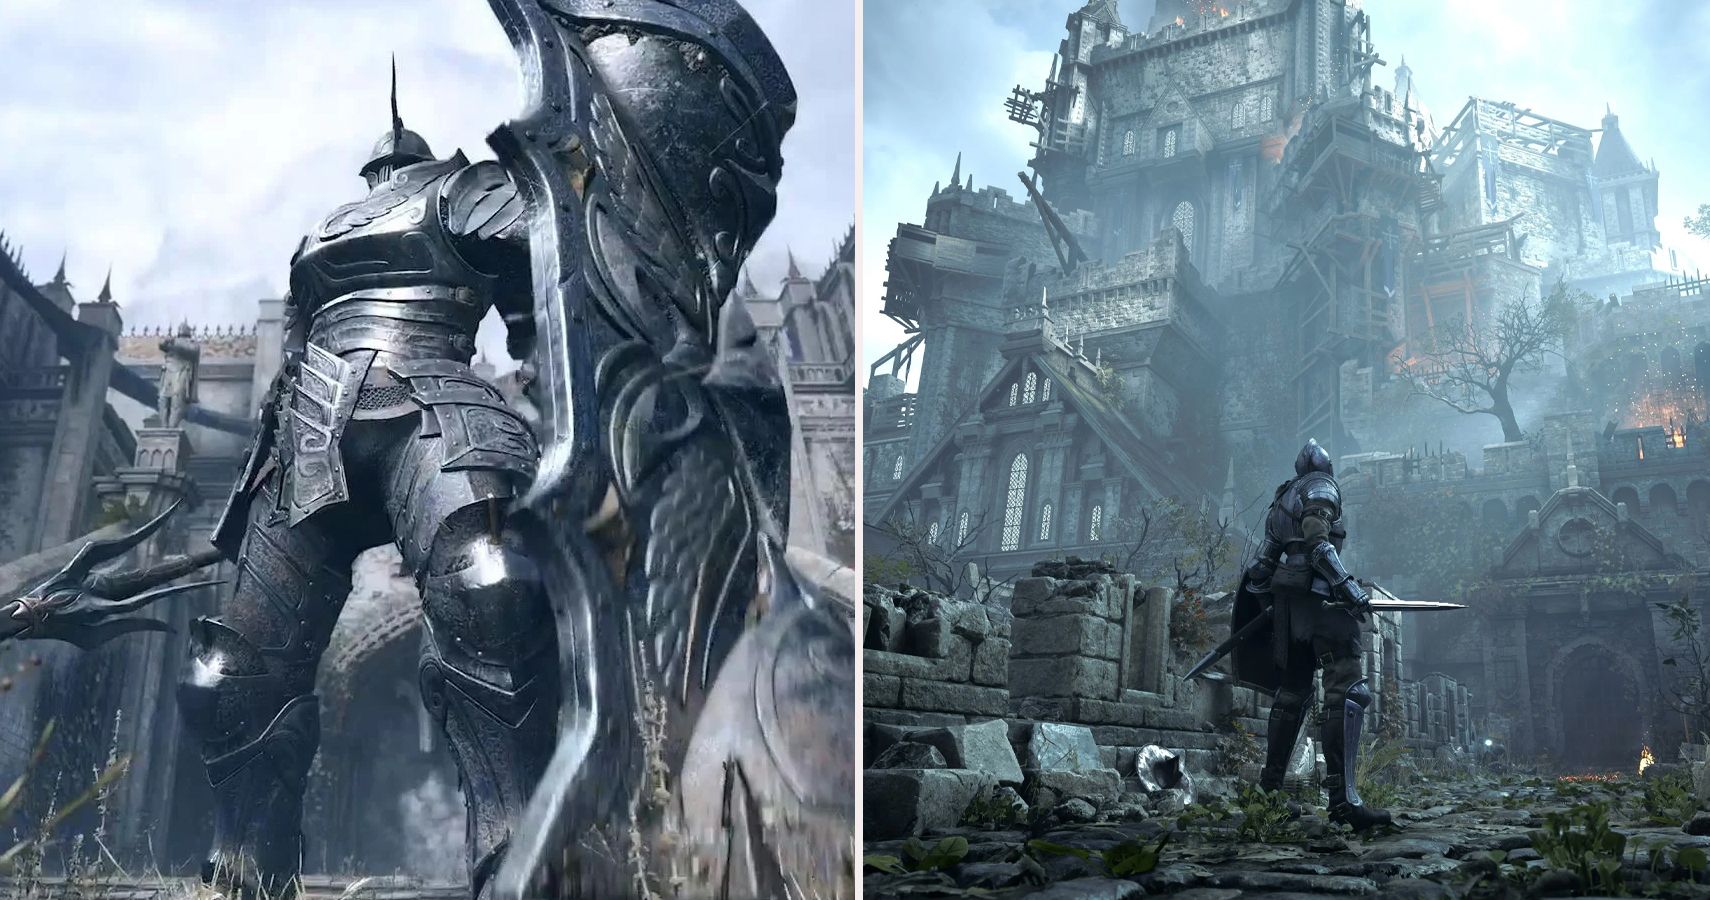 Demon's Souls' comparison video highlights the remake's improvements